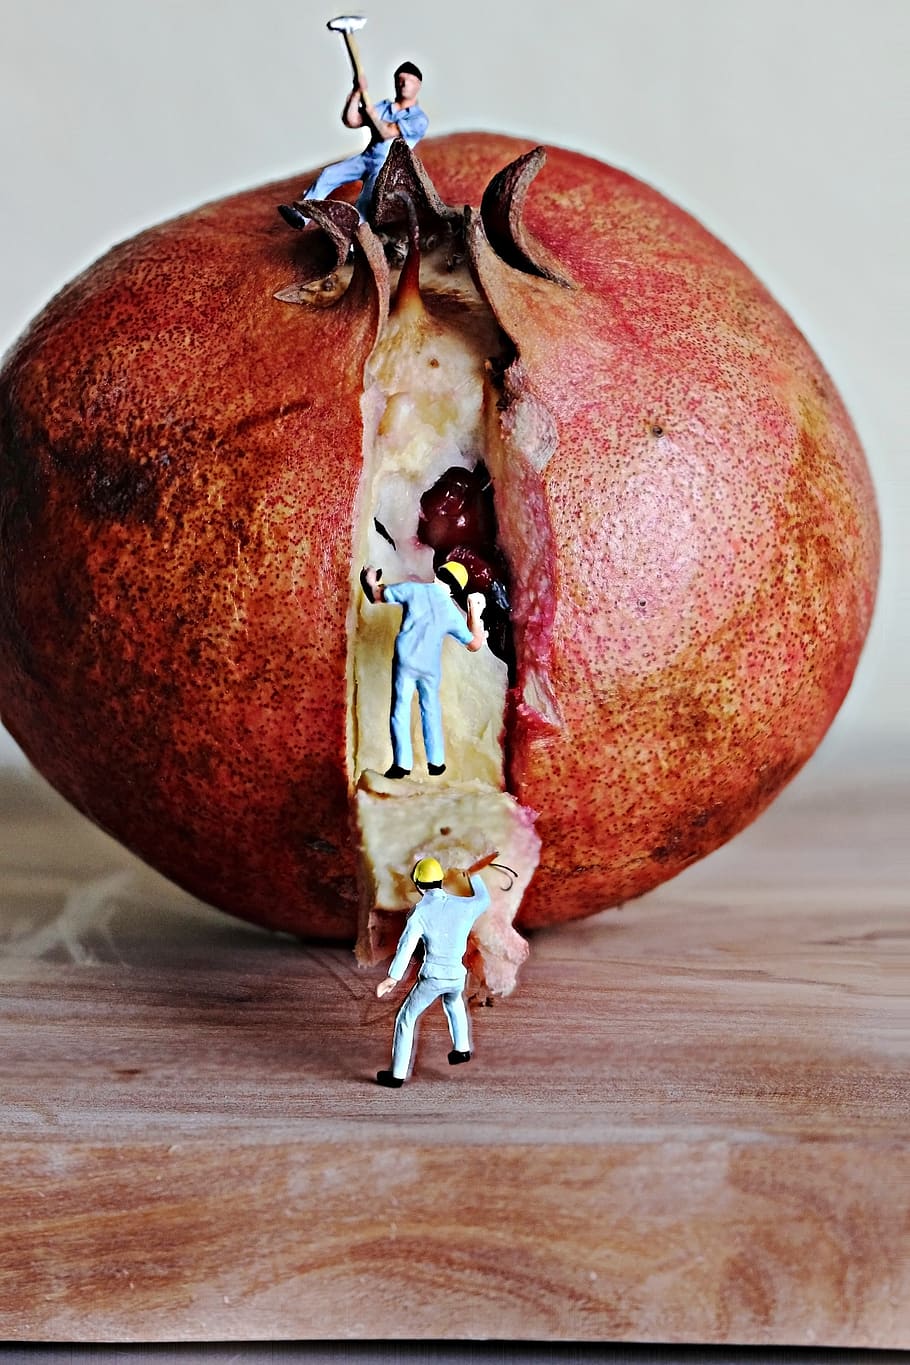 pomegranate, fruit, builder, concept, man, mini figure, closeup, ripe, food and drink, food